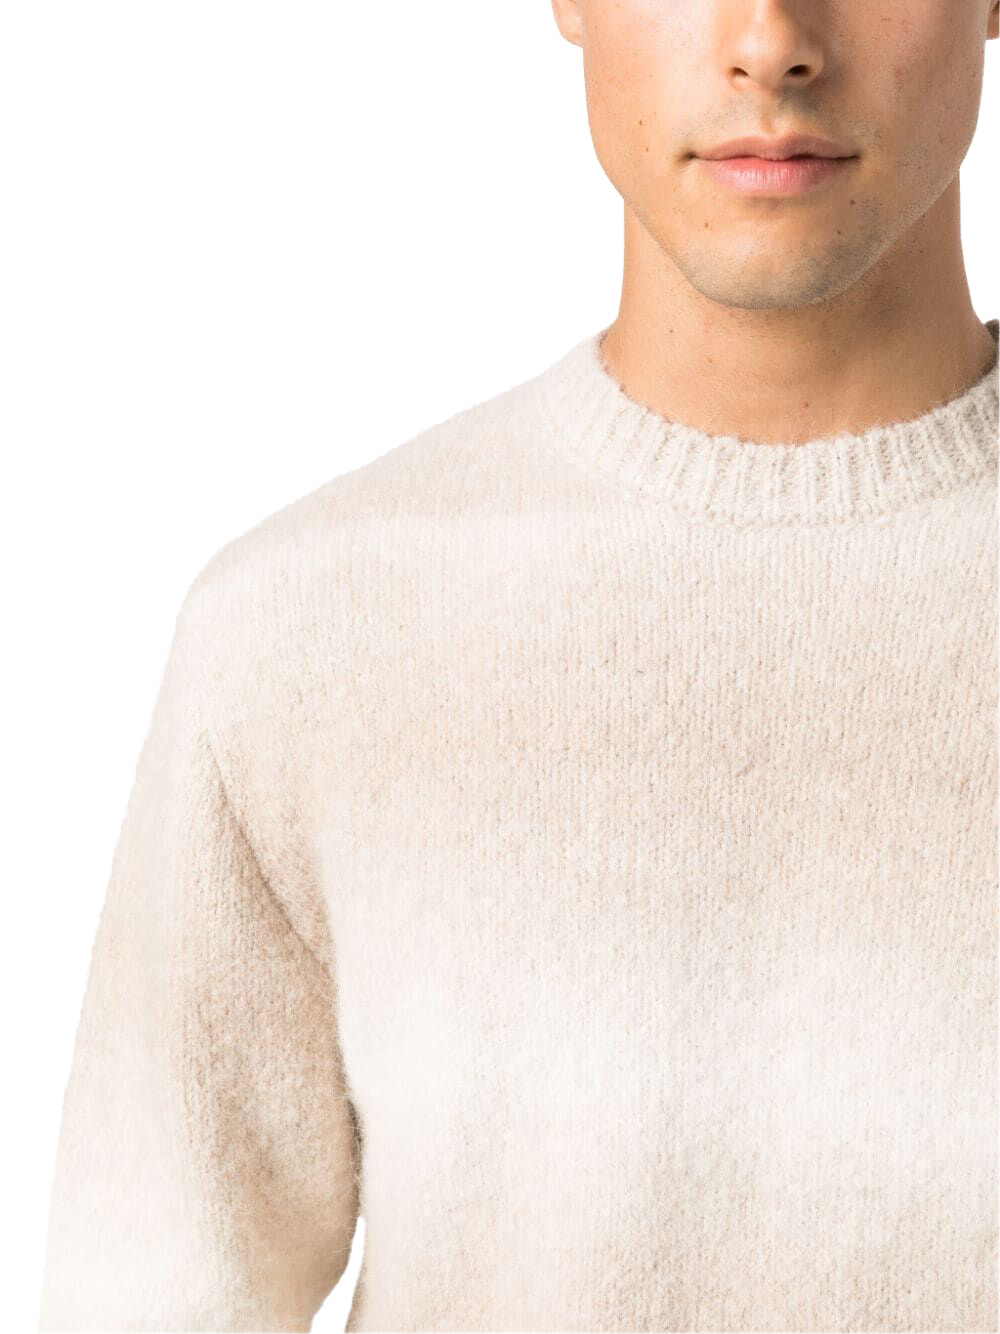 Moondog Beige Sweater